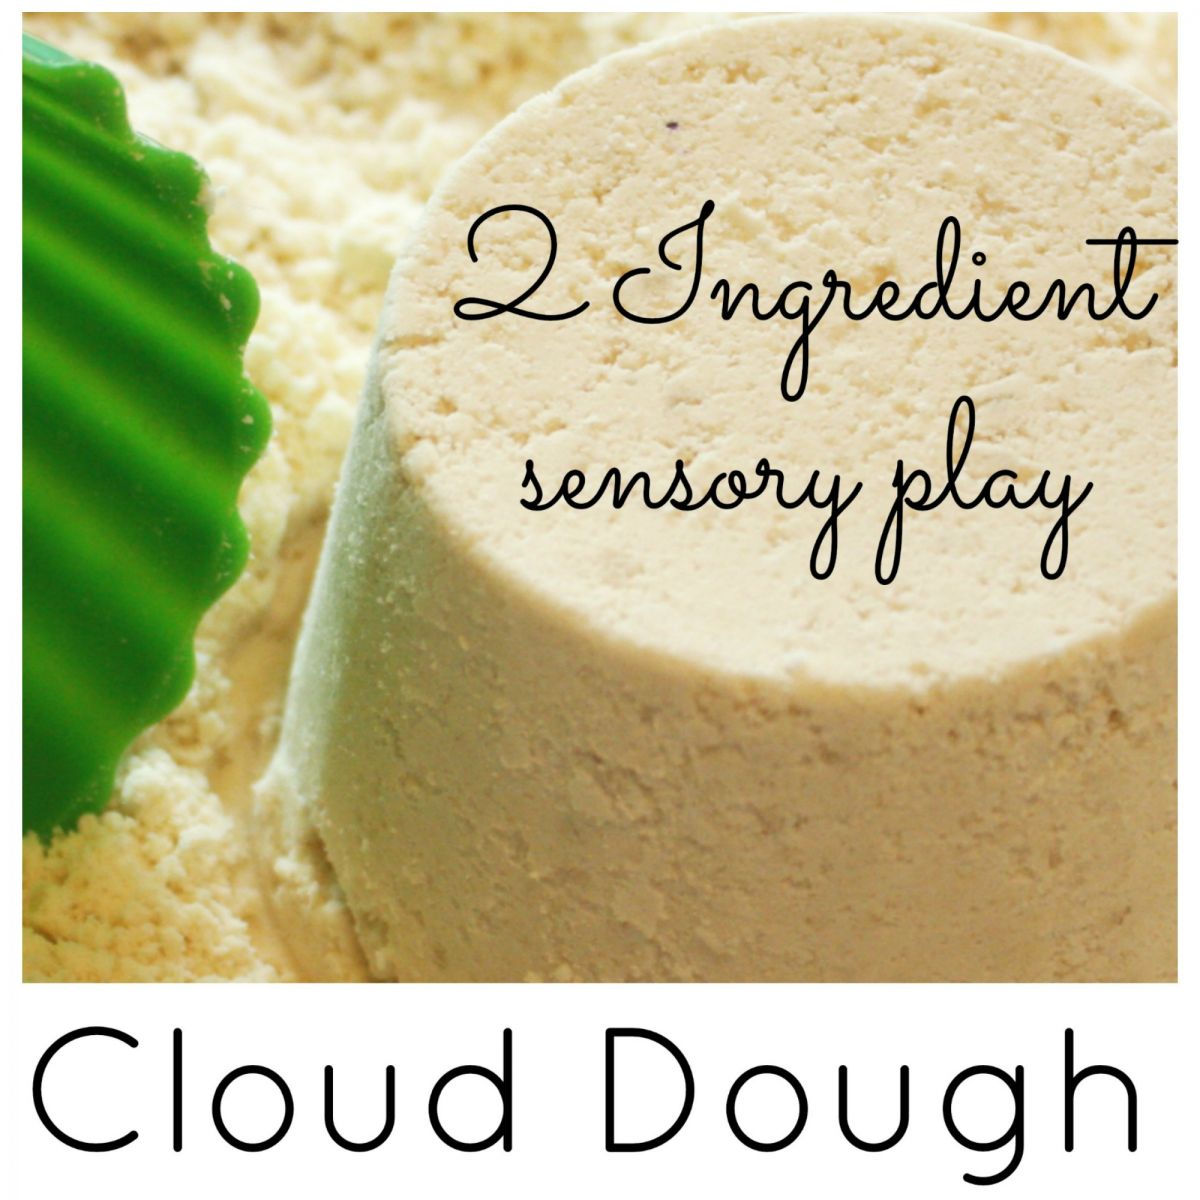 cloud dough recipe, sensory play dough